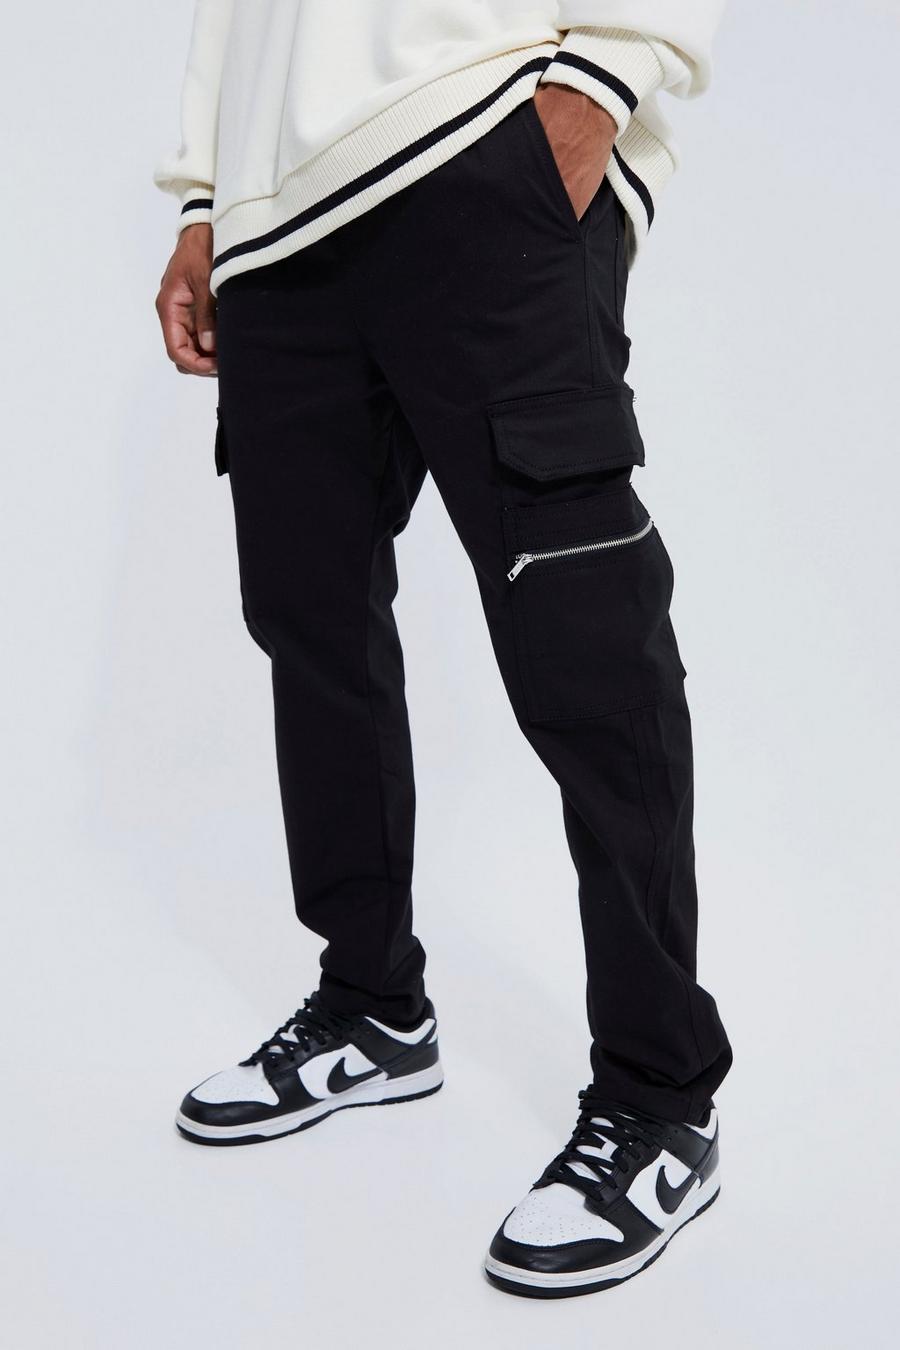 Pantalón corto cargo utilitario ajustado, Black negro